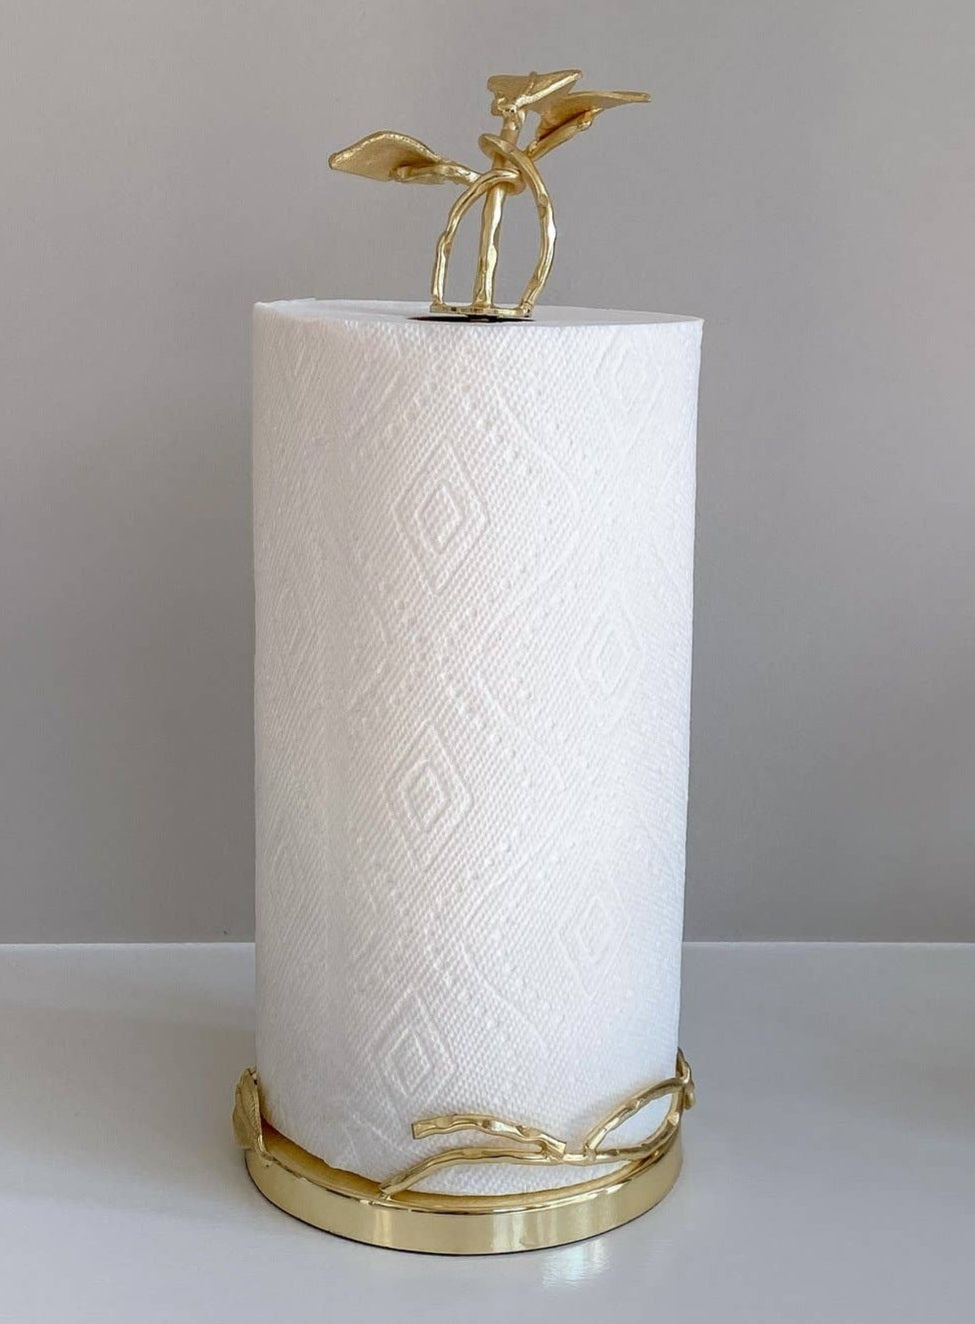 Paper Towel Holder, Paper Towel Holder For Countertop, Paper Towel